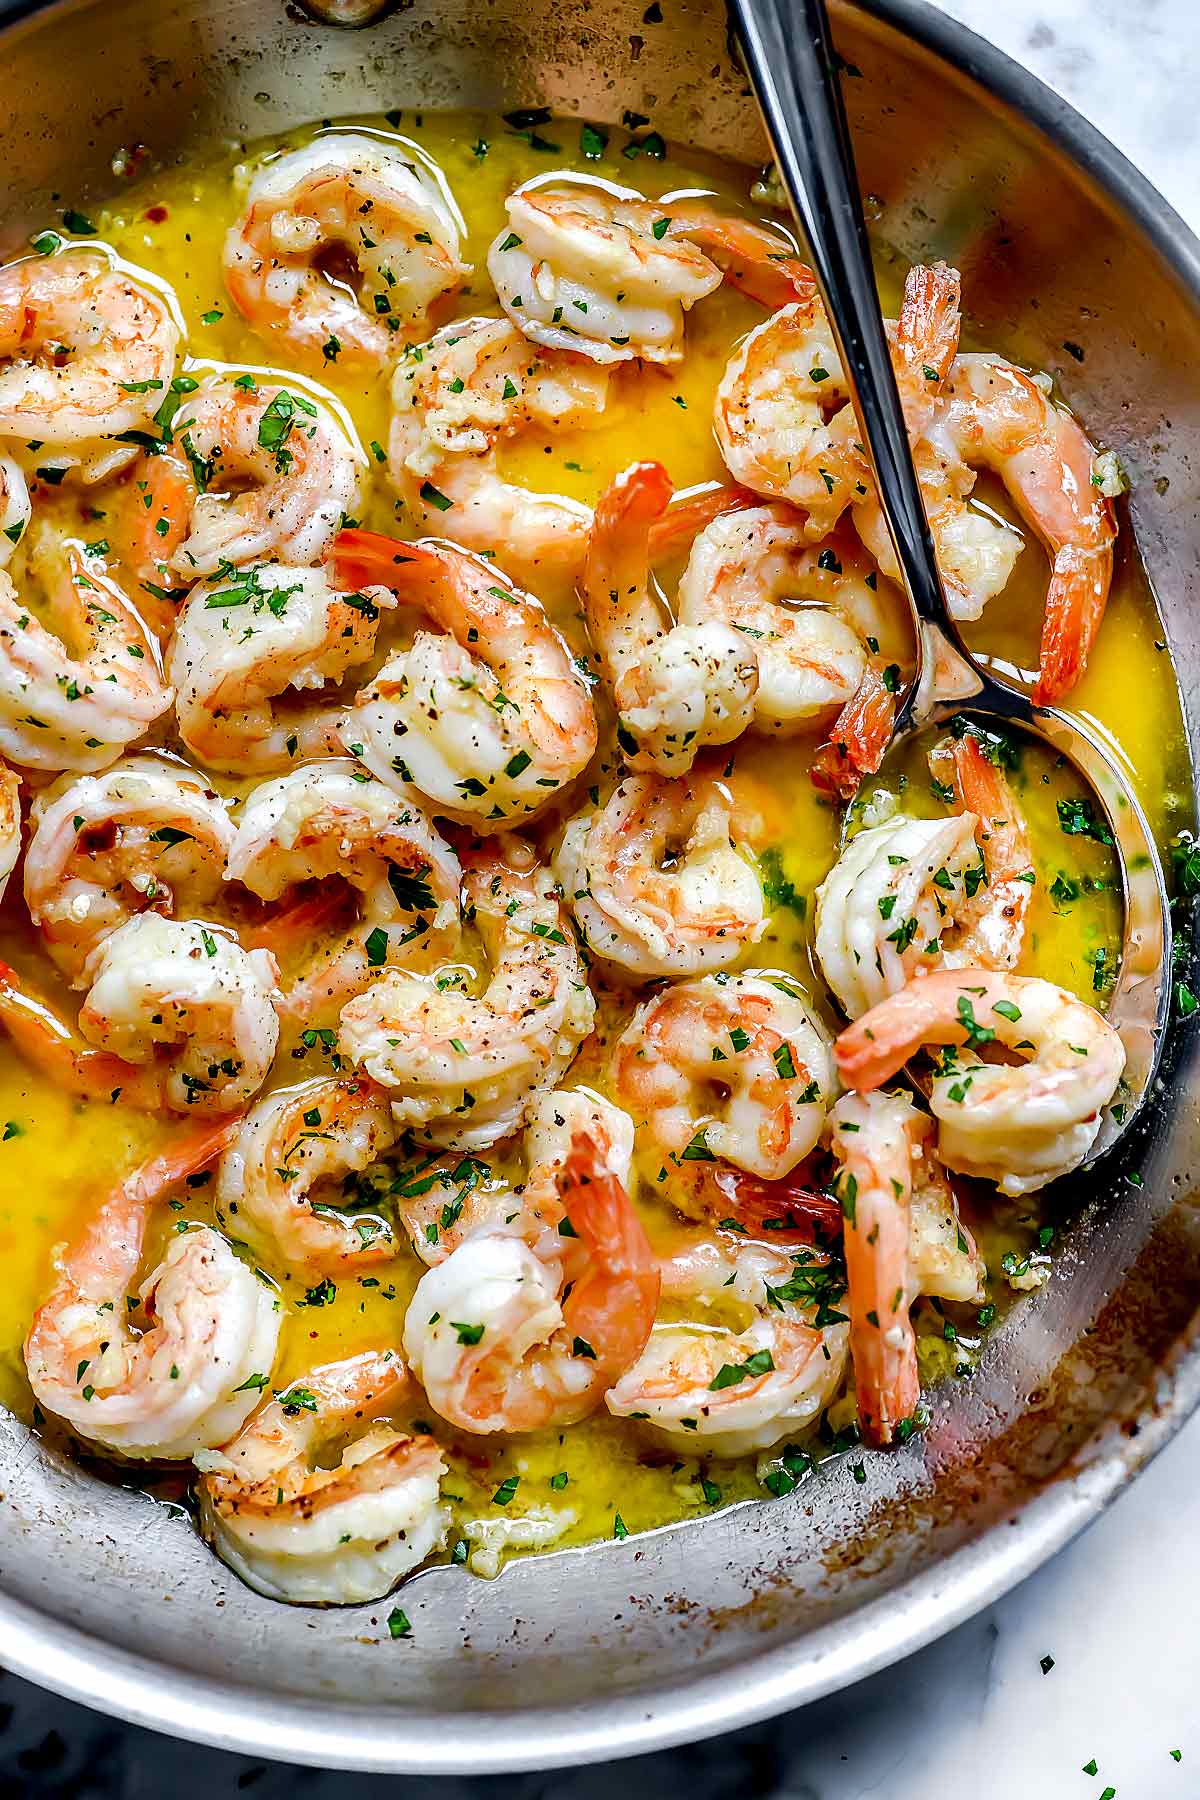 Comment préparer les meilleures crevettes scampi faciles | foodiecrush.com #shrimp #scampi #recipe #healthy